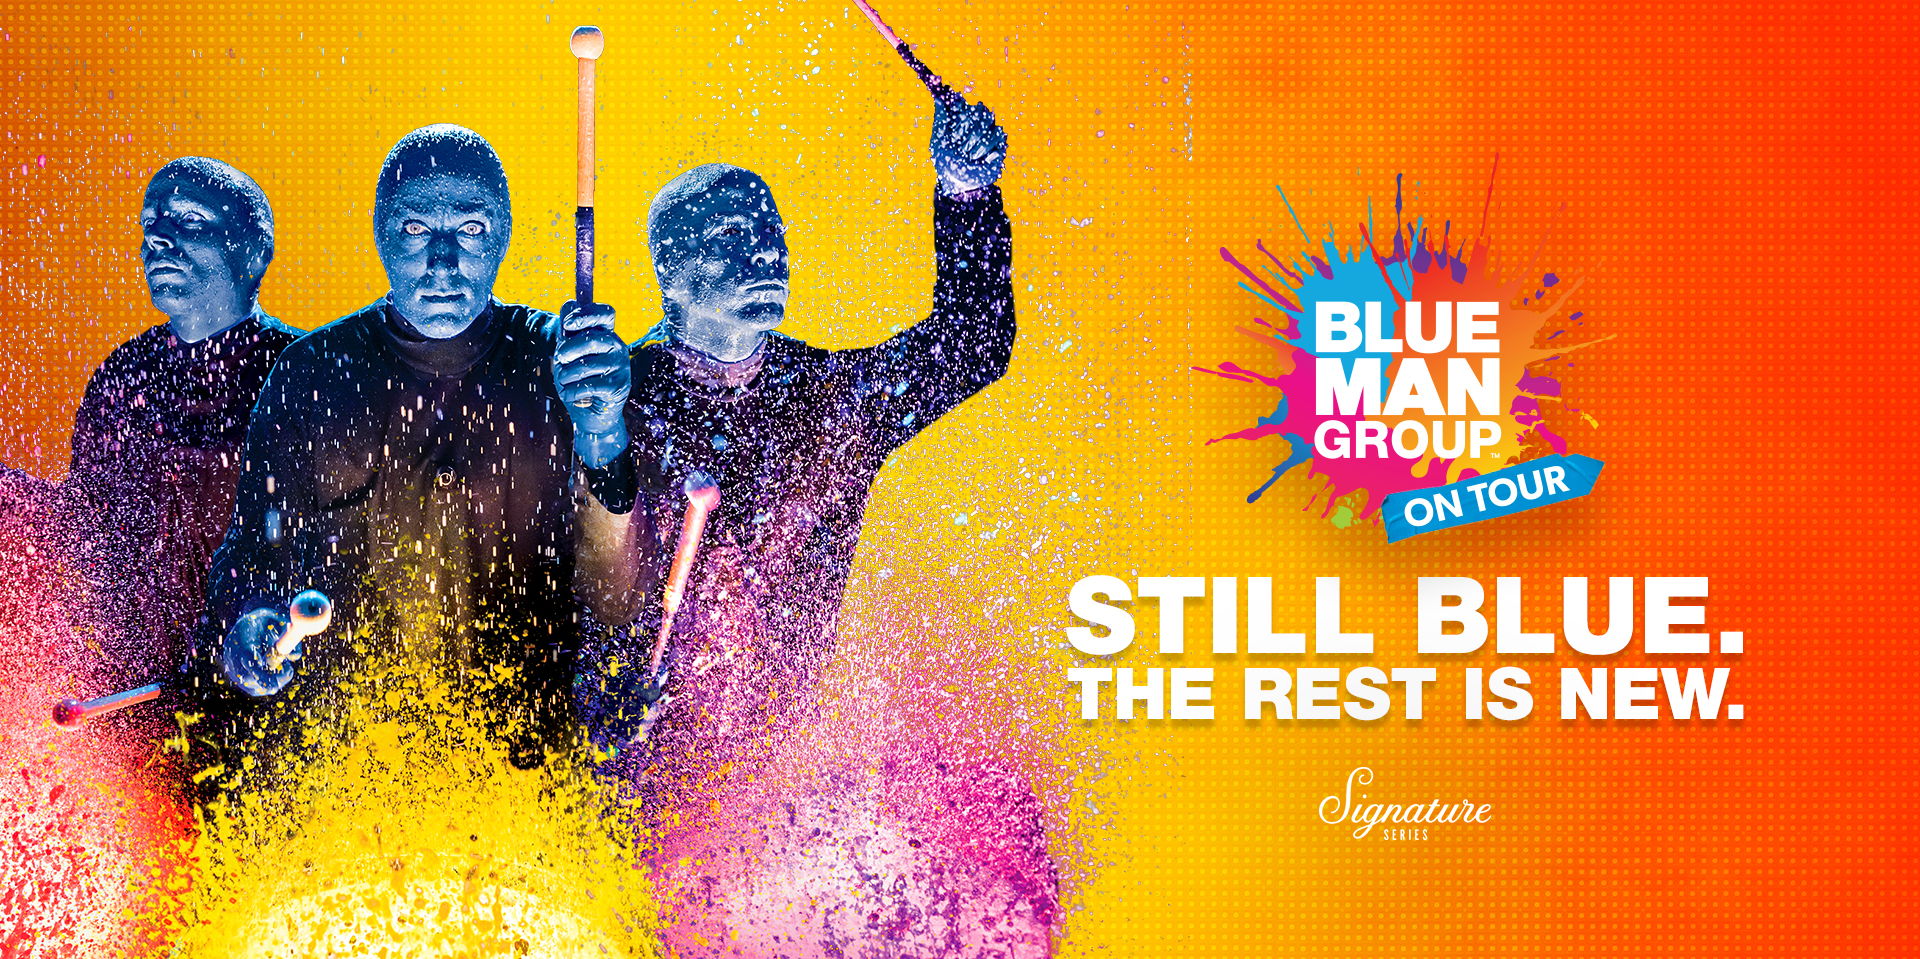 Blue Man Group promotional image